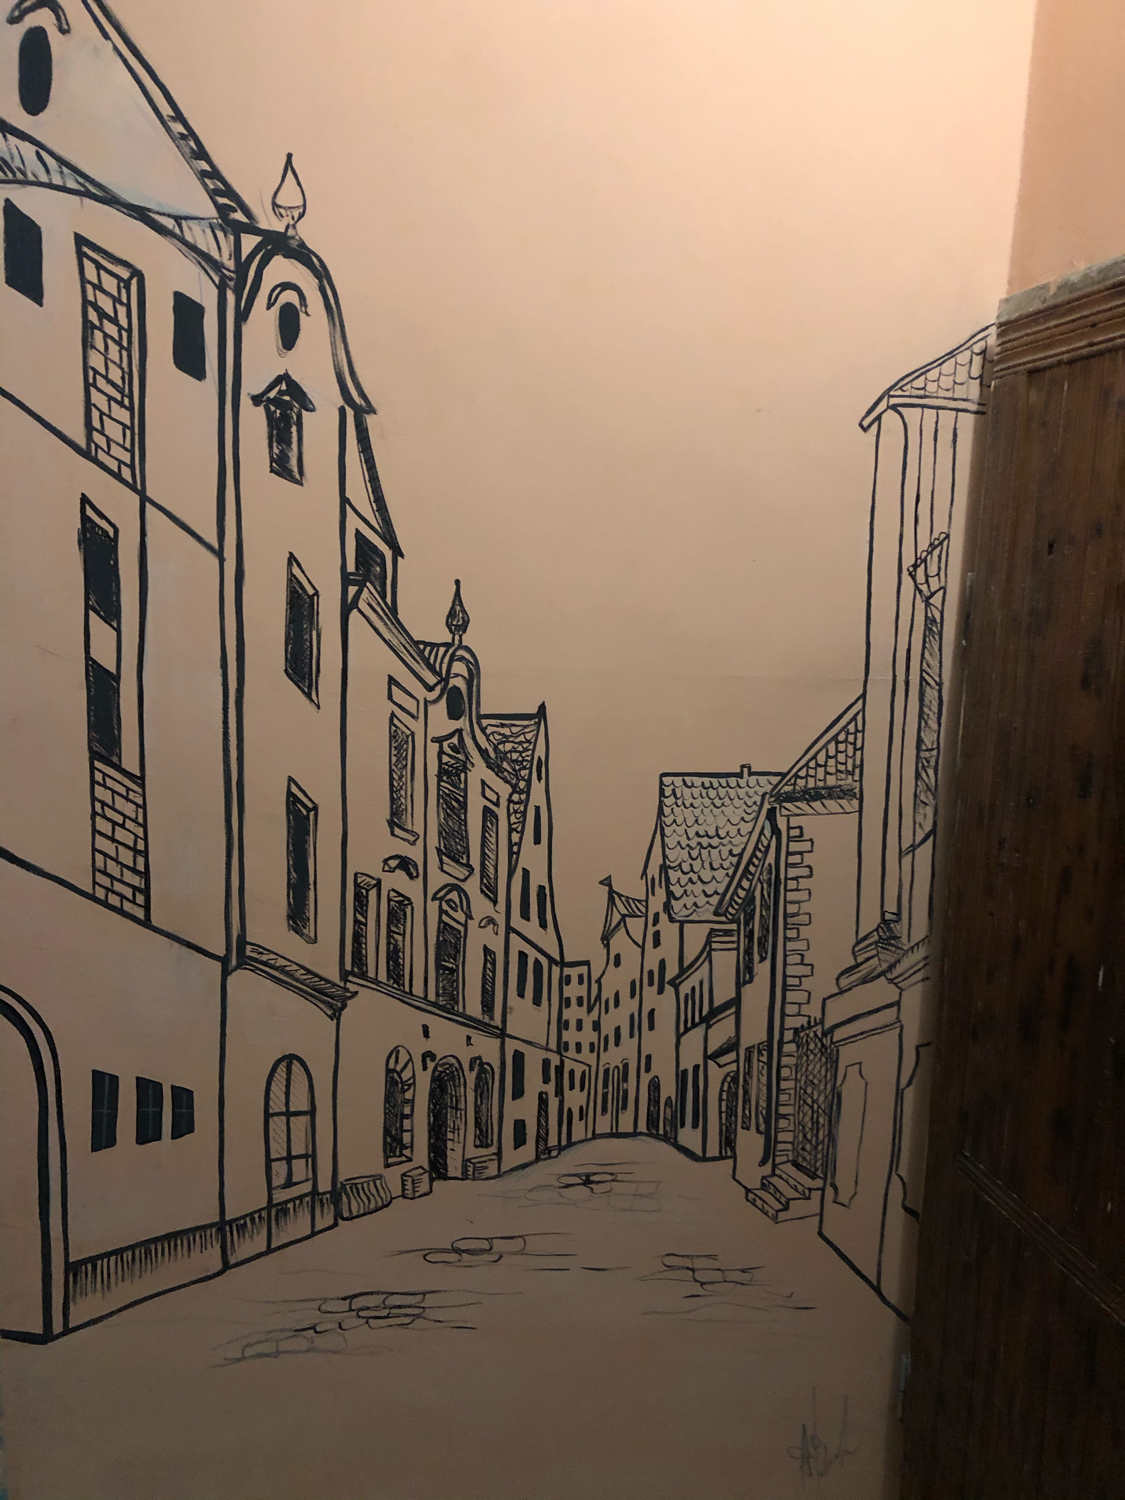 Рисунки неизвестного автора украсили подъезд дома в Серове